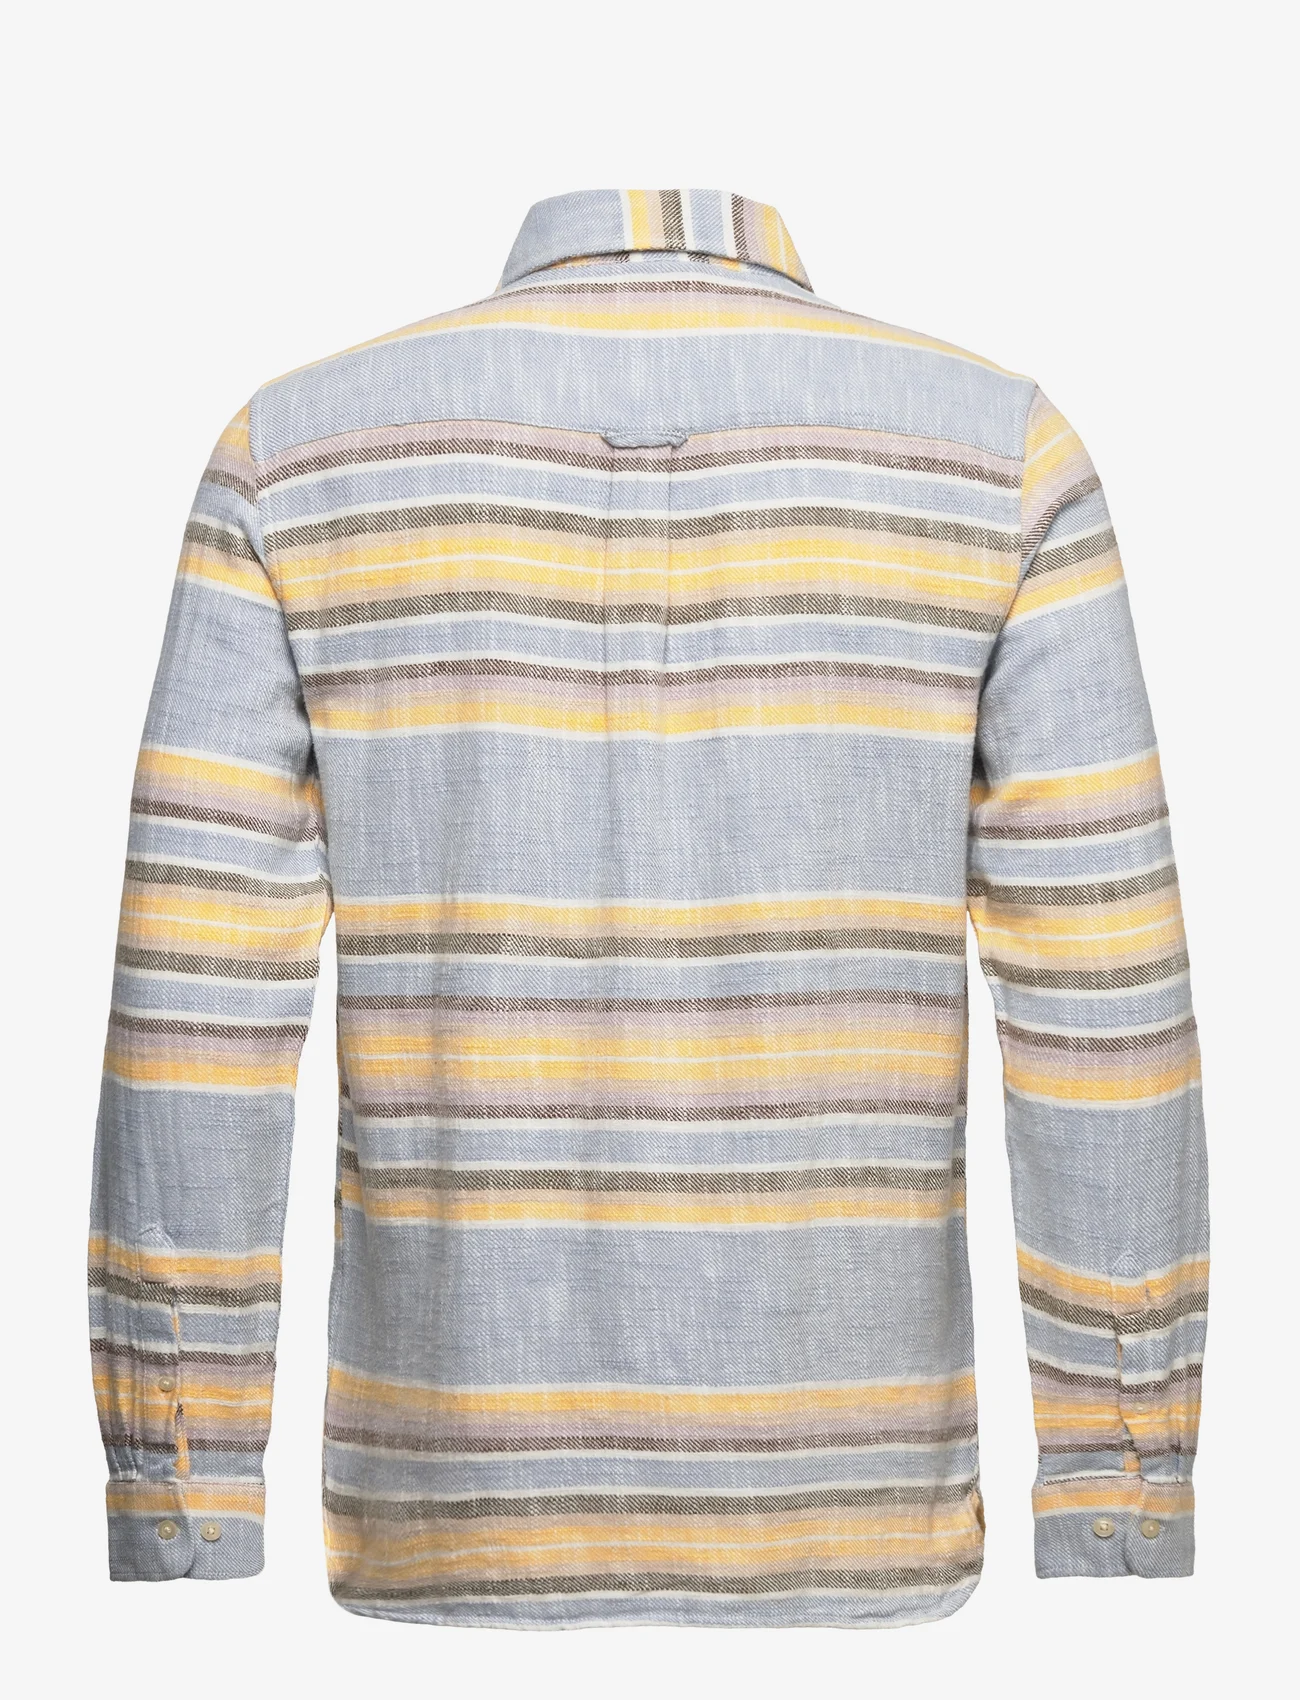 Knowledge Cotton Apparel - Custom fit horisontal striped shirt - vabaajasärgid - multi color - 1